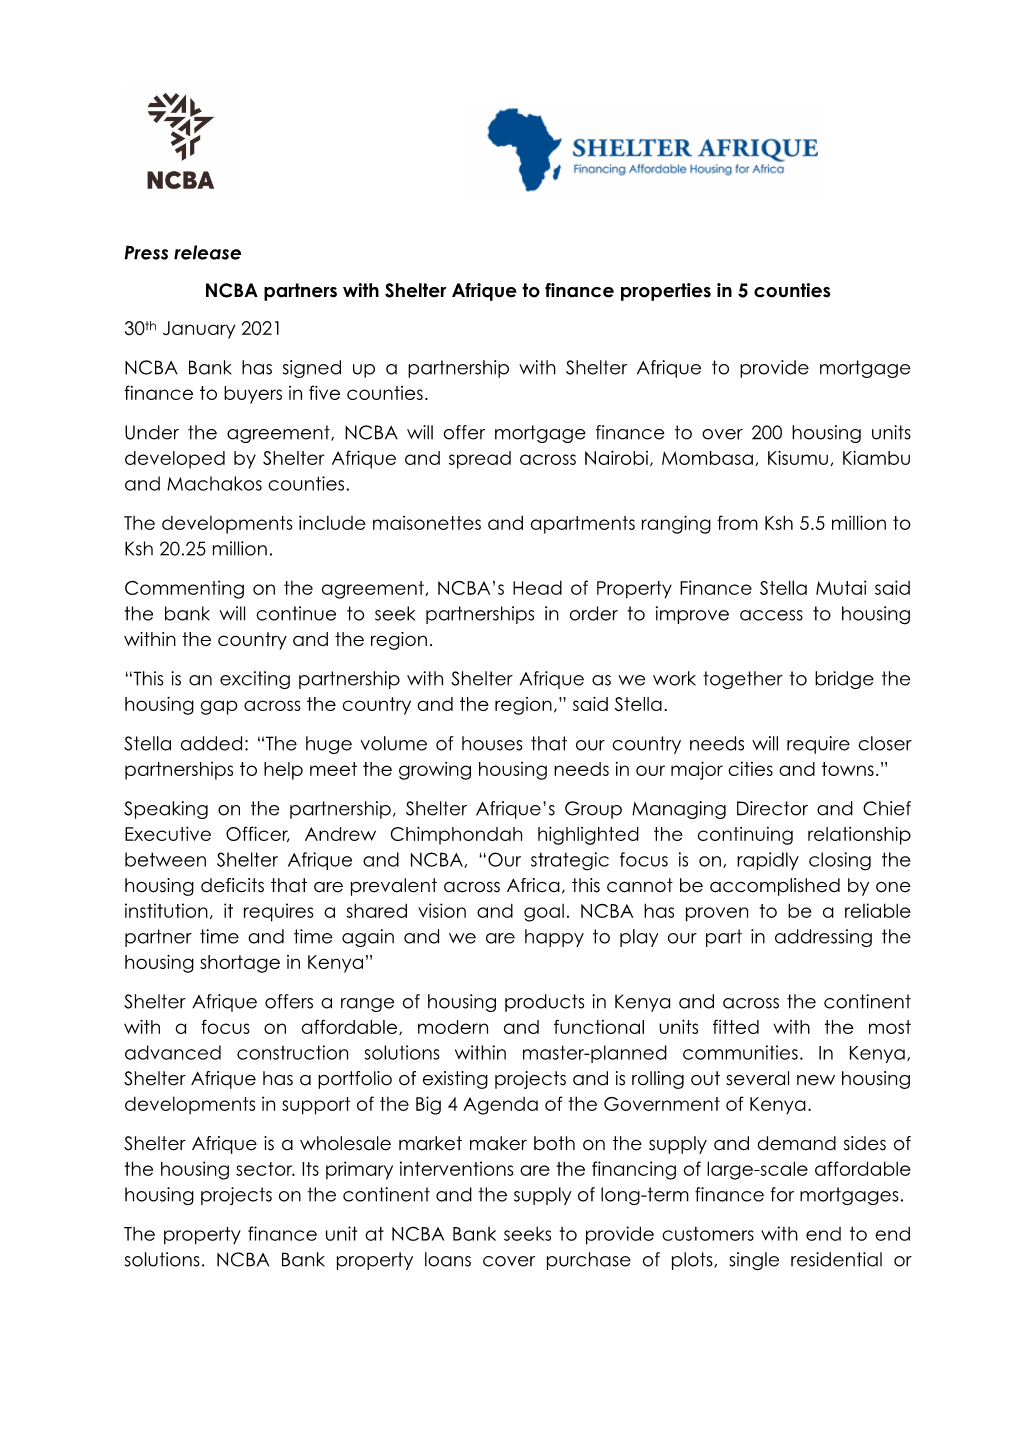 Press Release NCBA Shelter Afrique